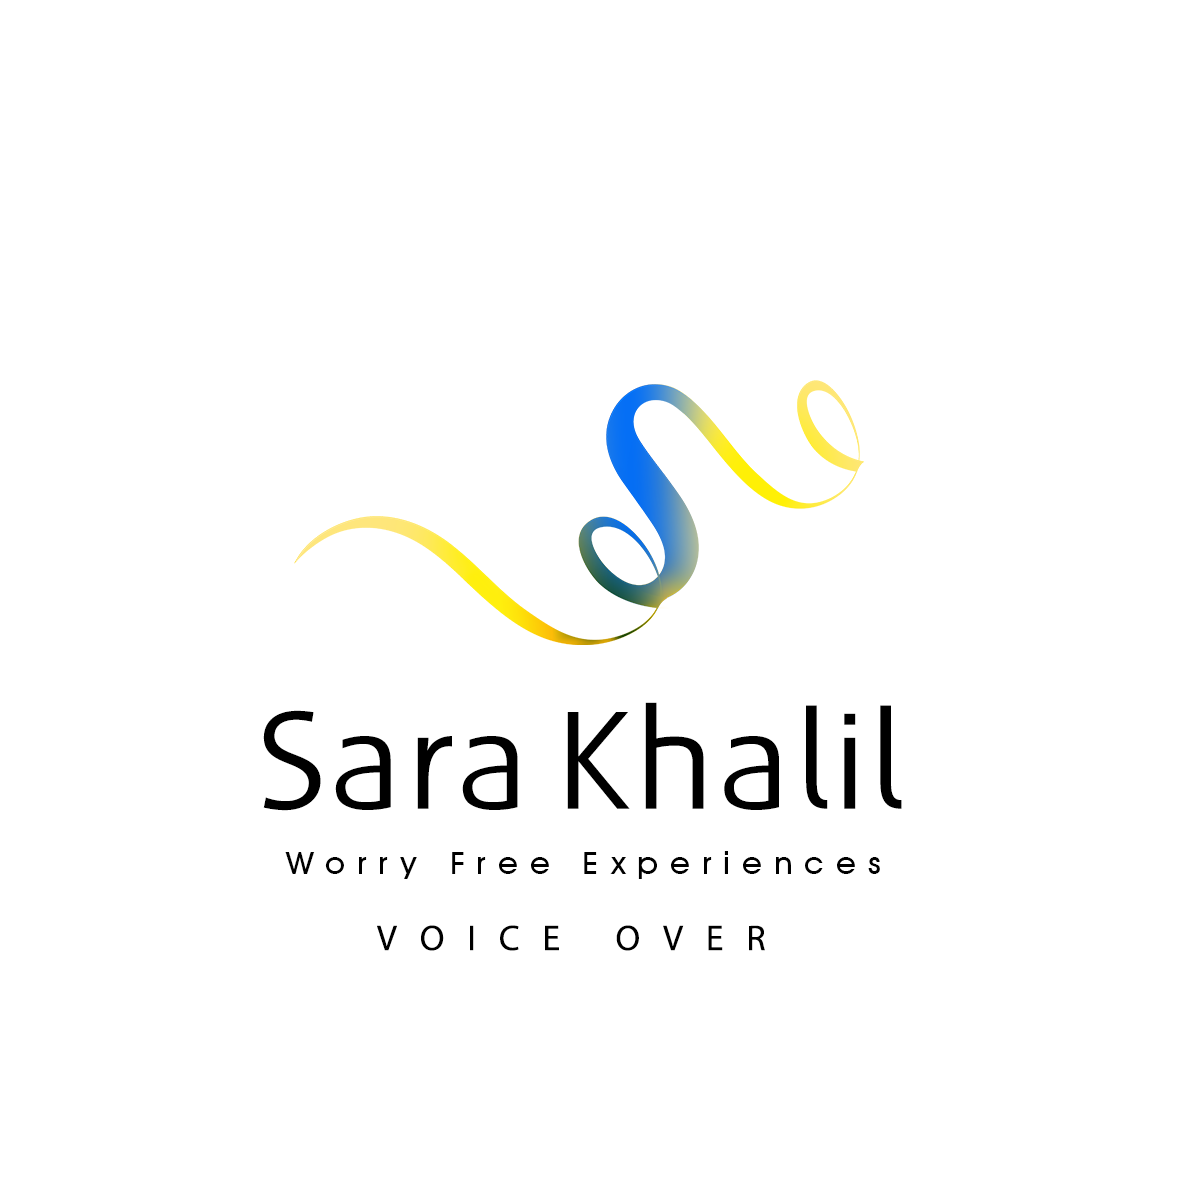 Profile photo for Sara khalil